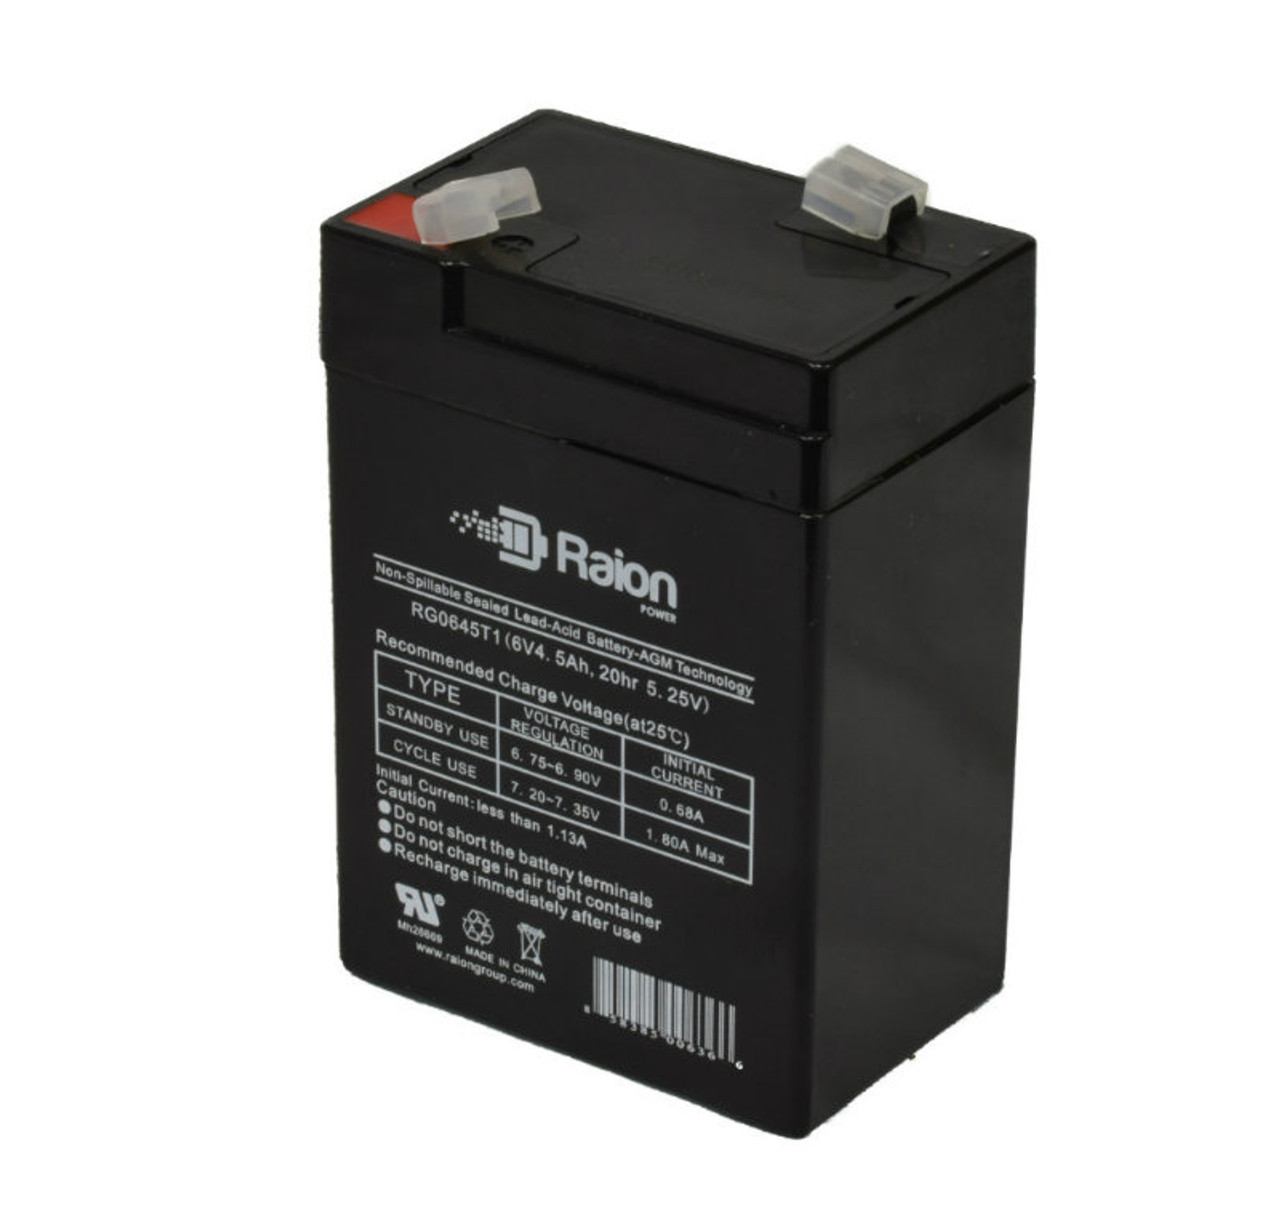 Raion Power RG0645T1 6V 4.5Ah Replacement Battery Cartridge for Koyosonic NP4.5-6